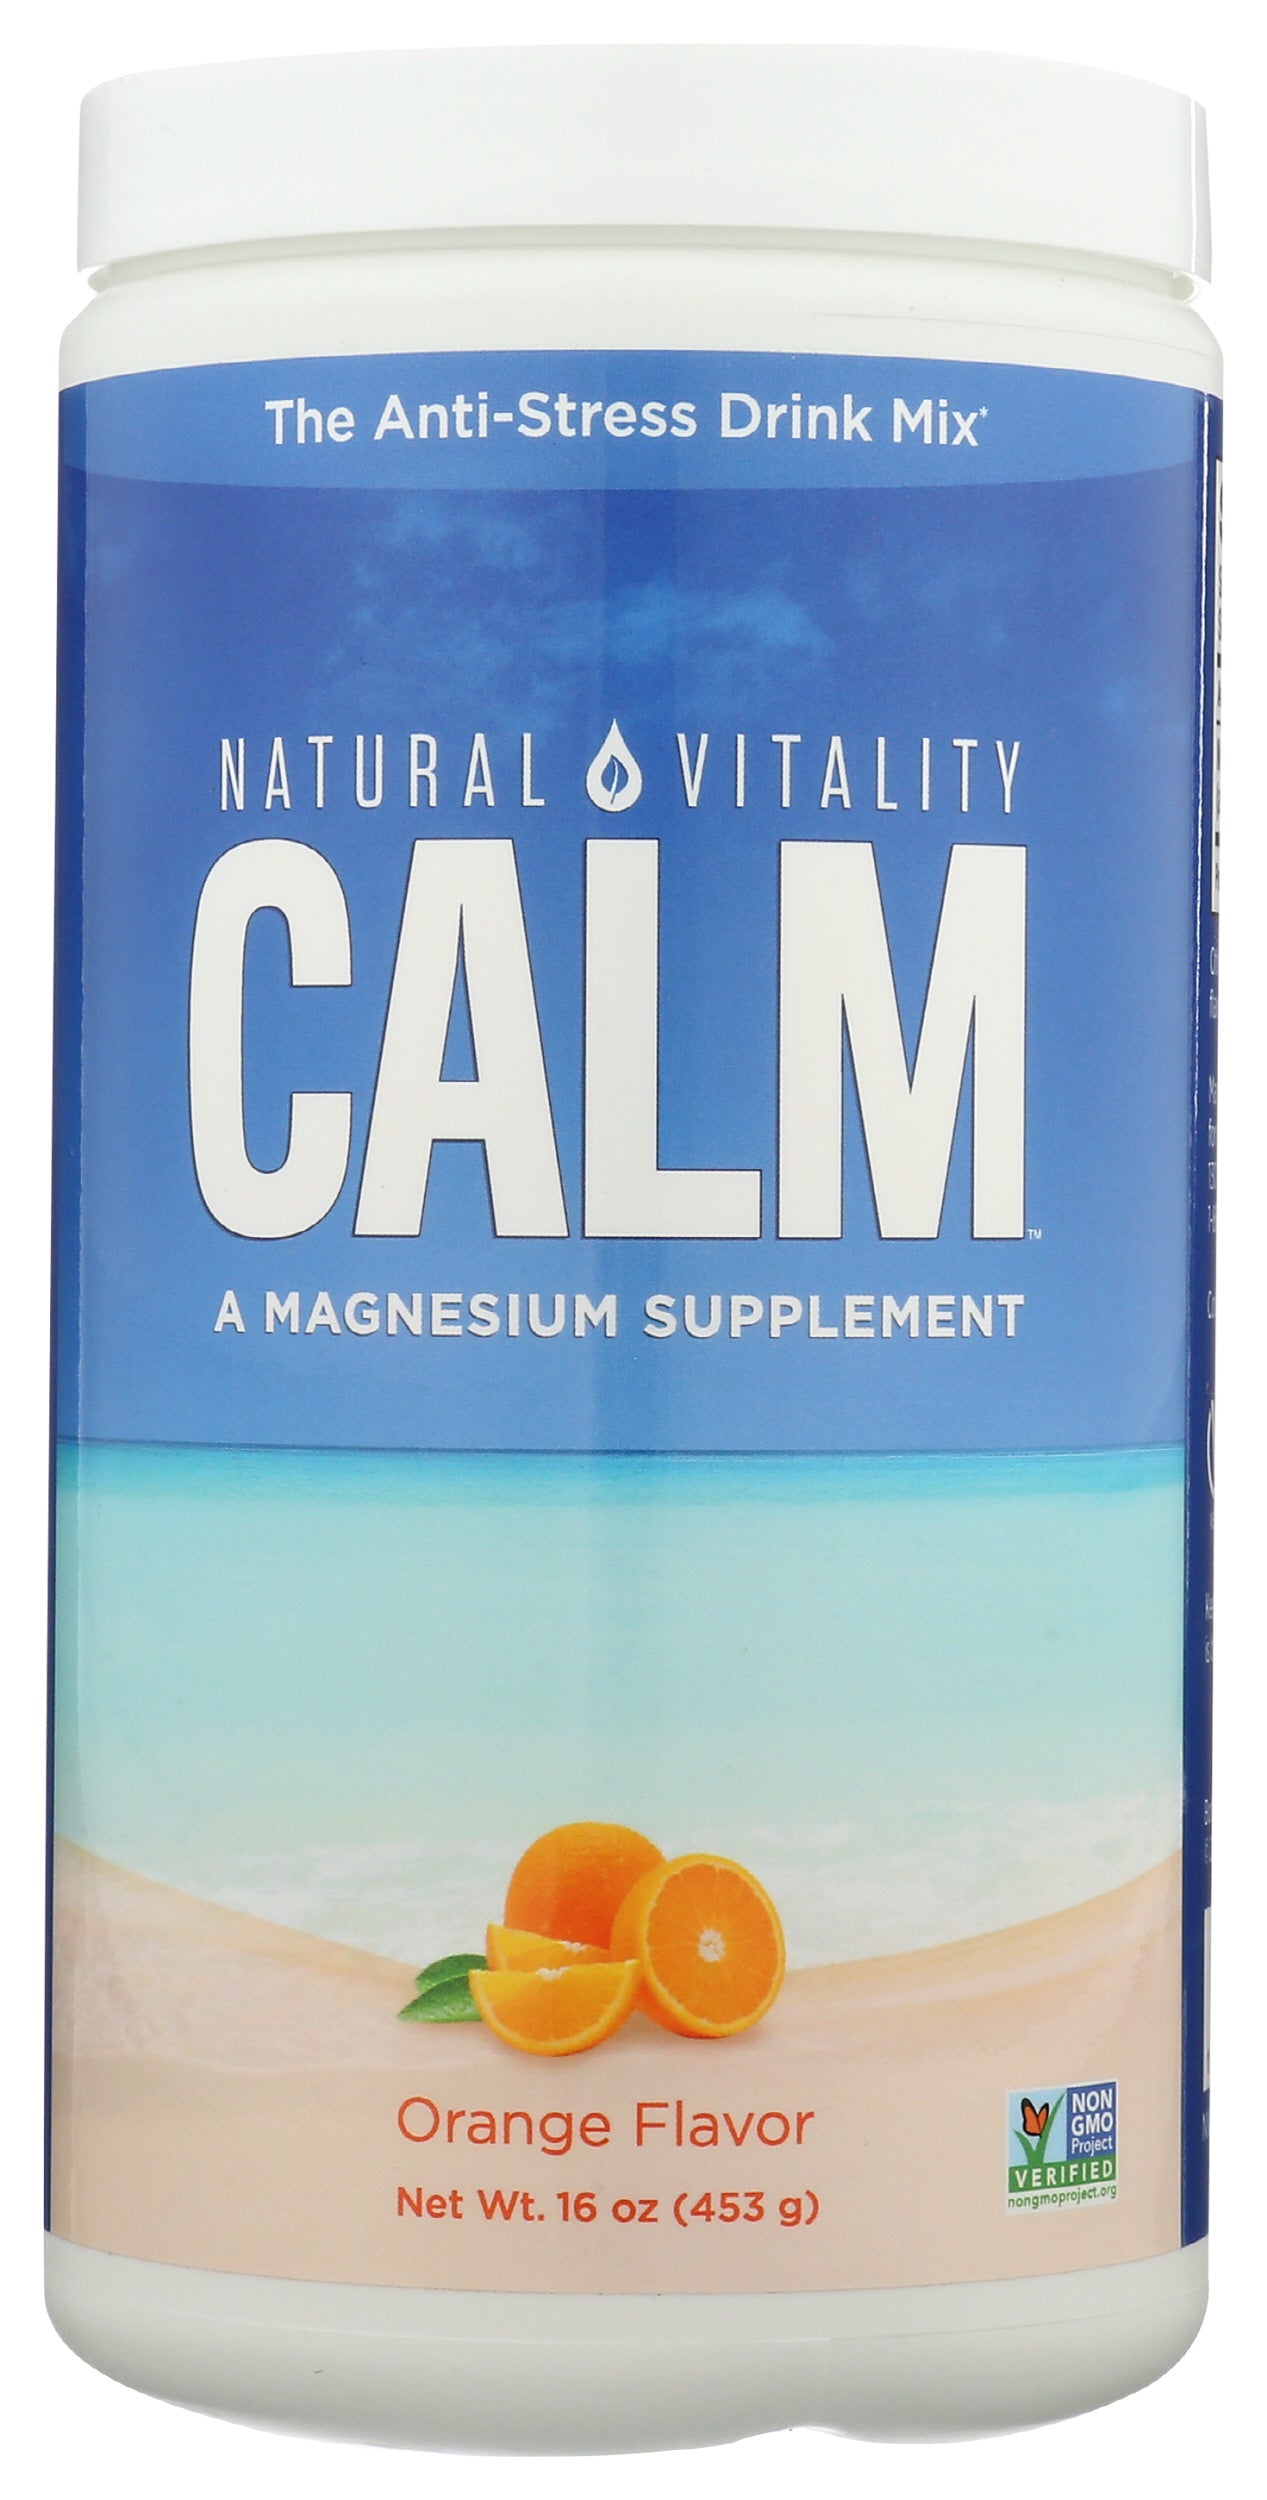 Natural Vitality Calm Magnesium Supplement Orange Flavor 16oz Front of Bottle